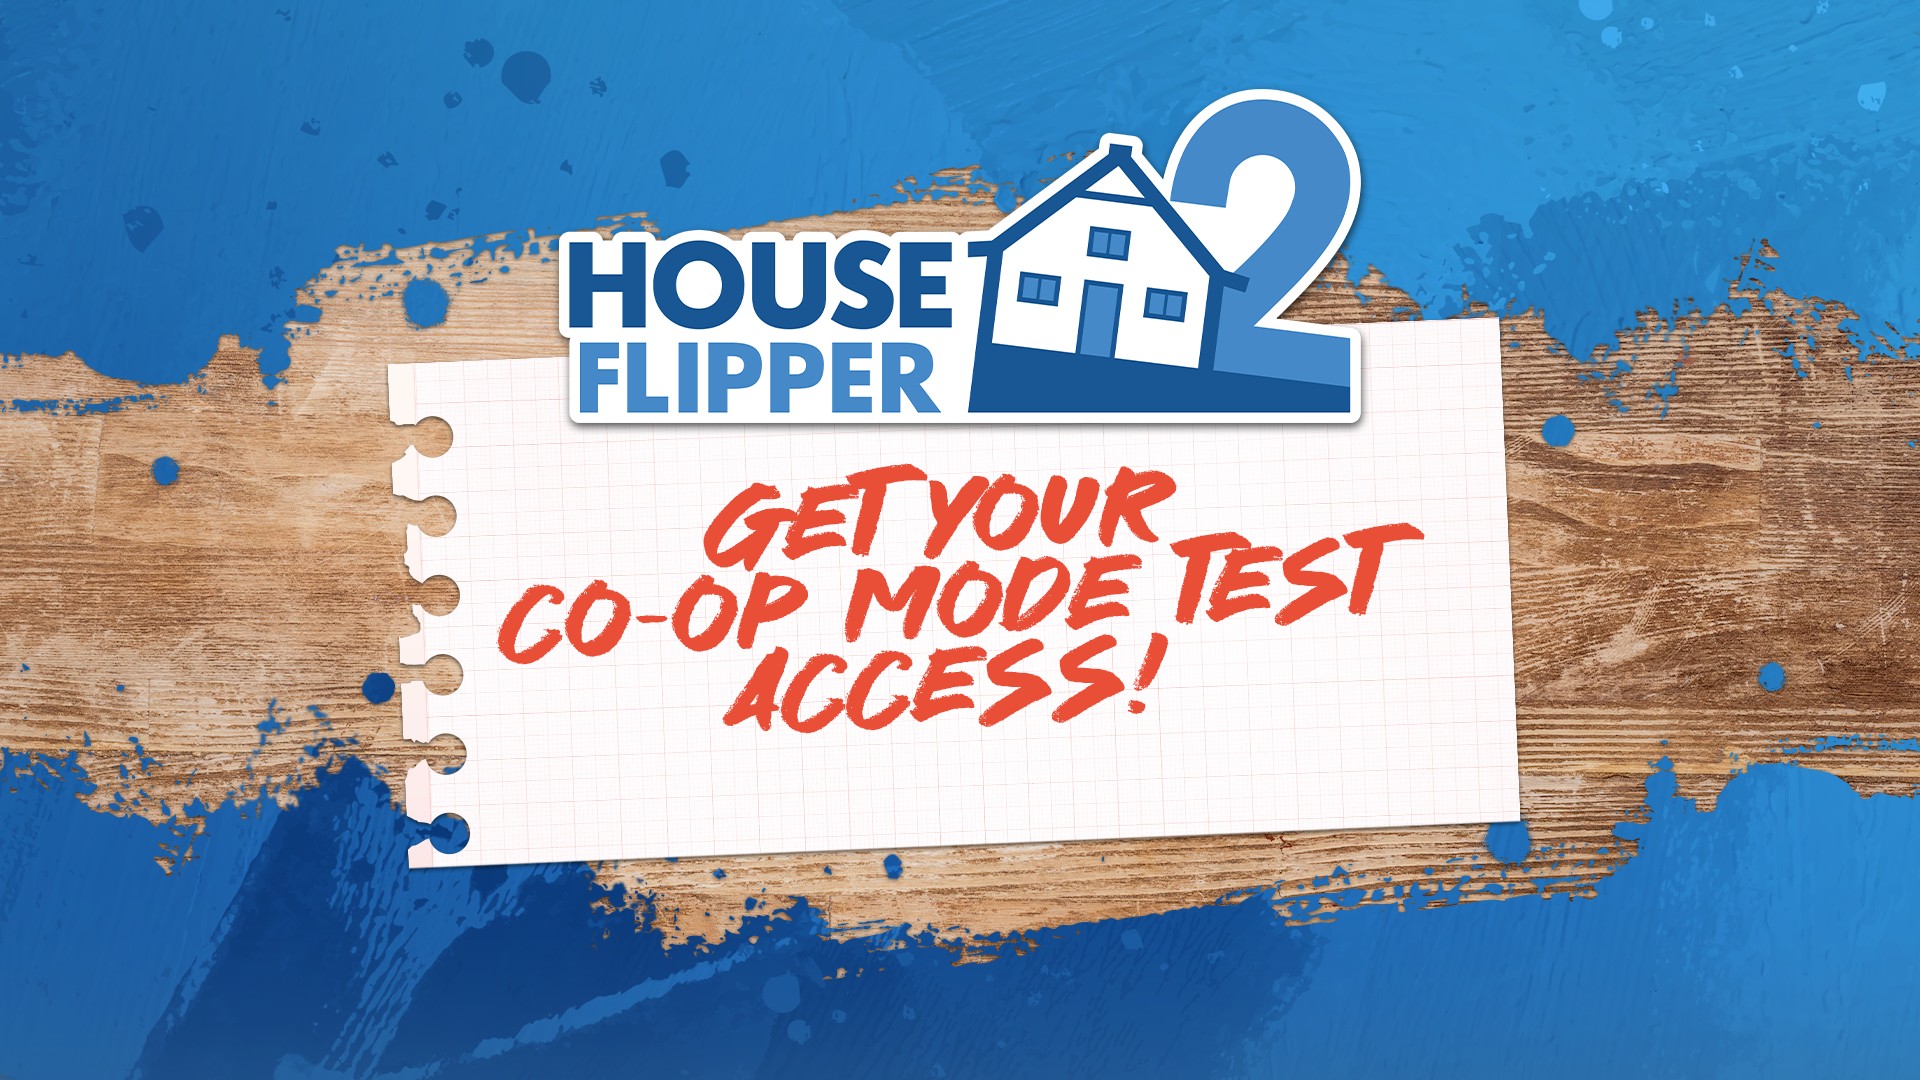 House Flipper 2 Co-op modu.